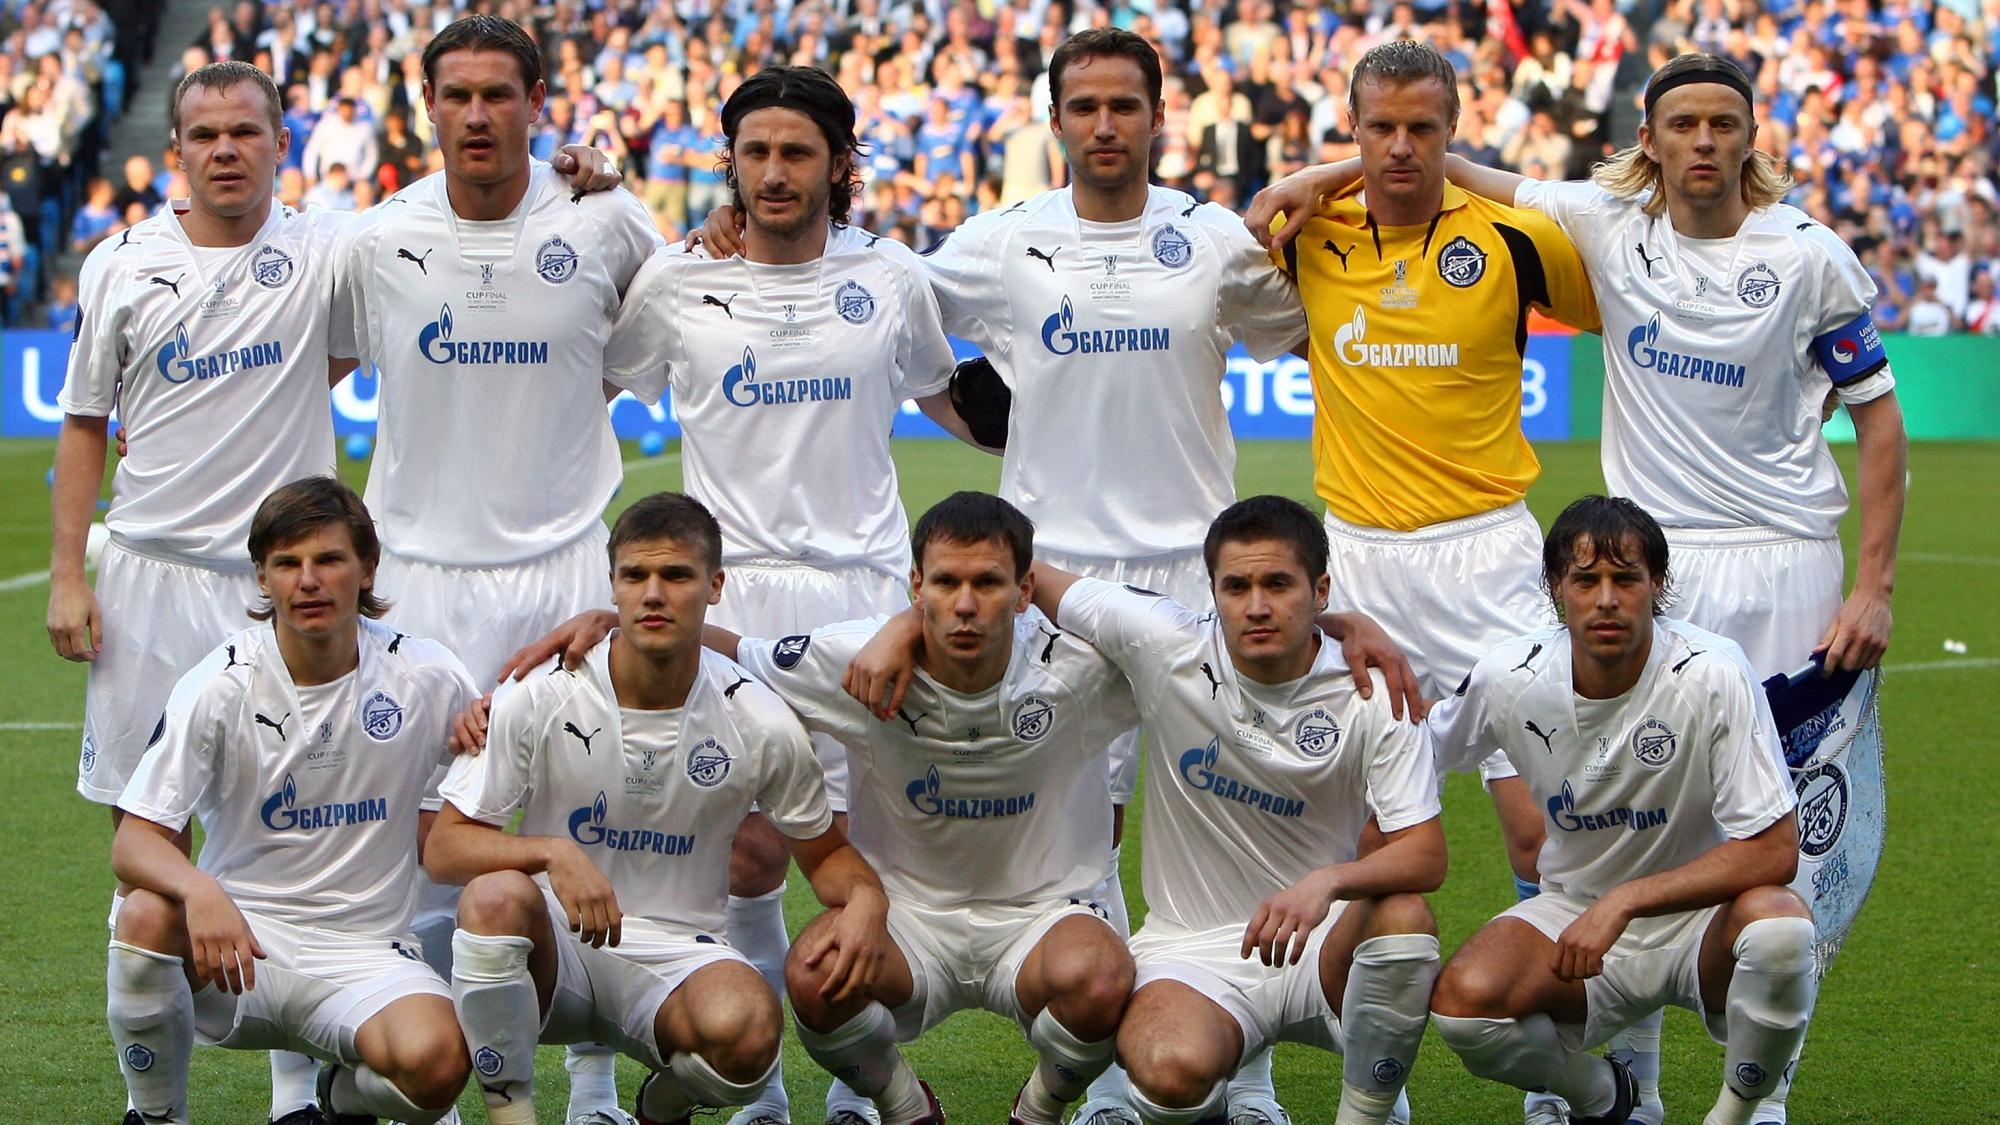 Состав ювентуса в сезоне 2007- 2008